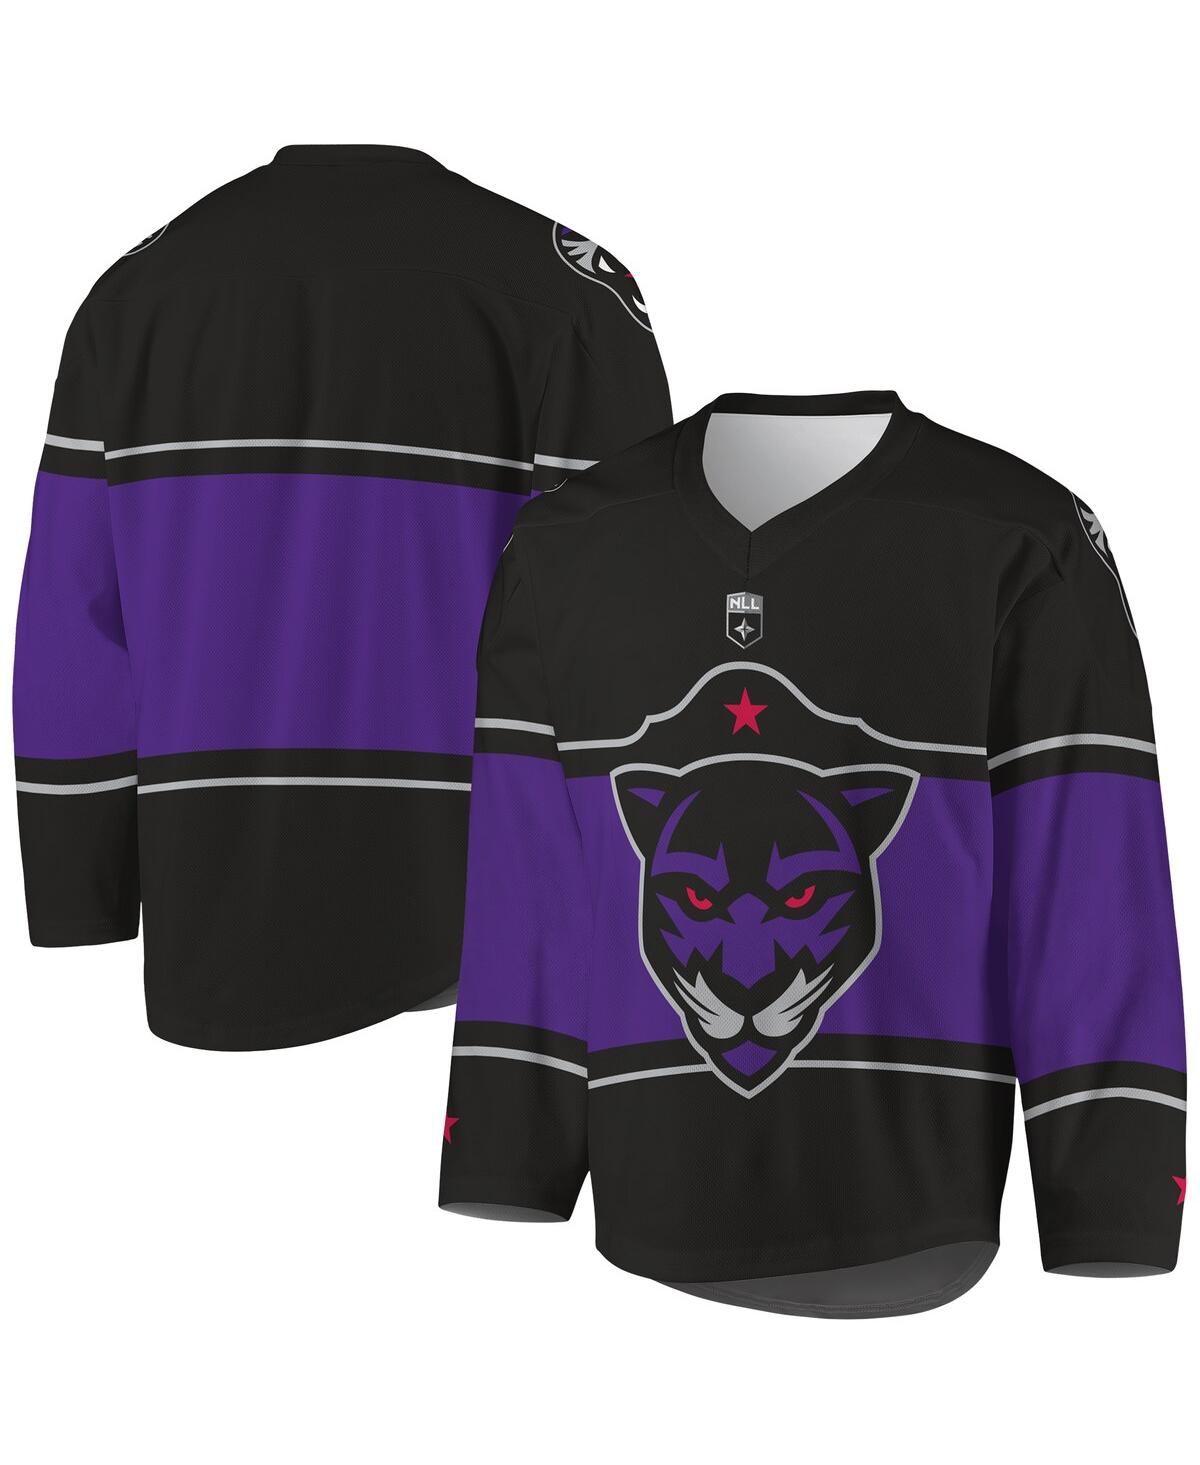 Men's Black and Purple Panther City Lacrosse Club Replica Jersey - Black, Purple